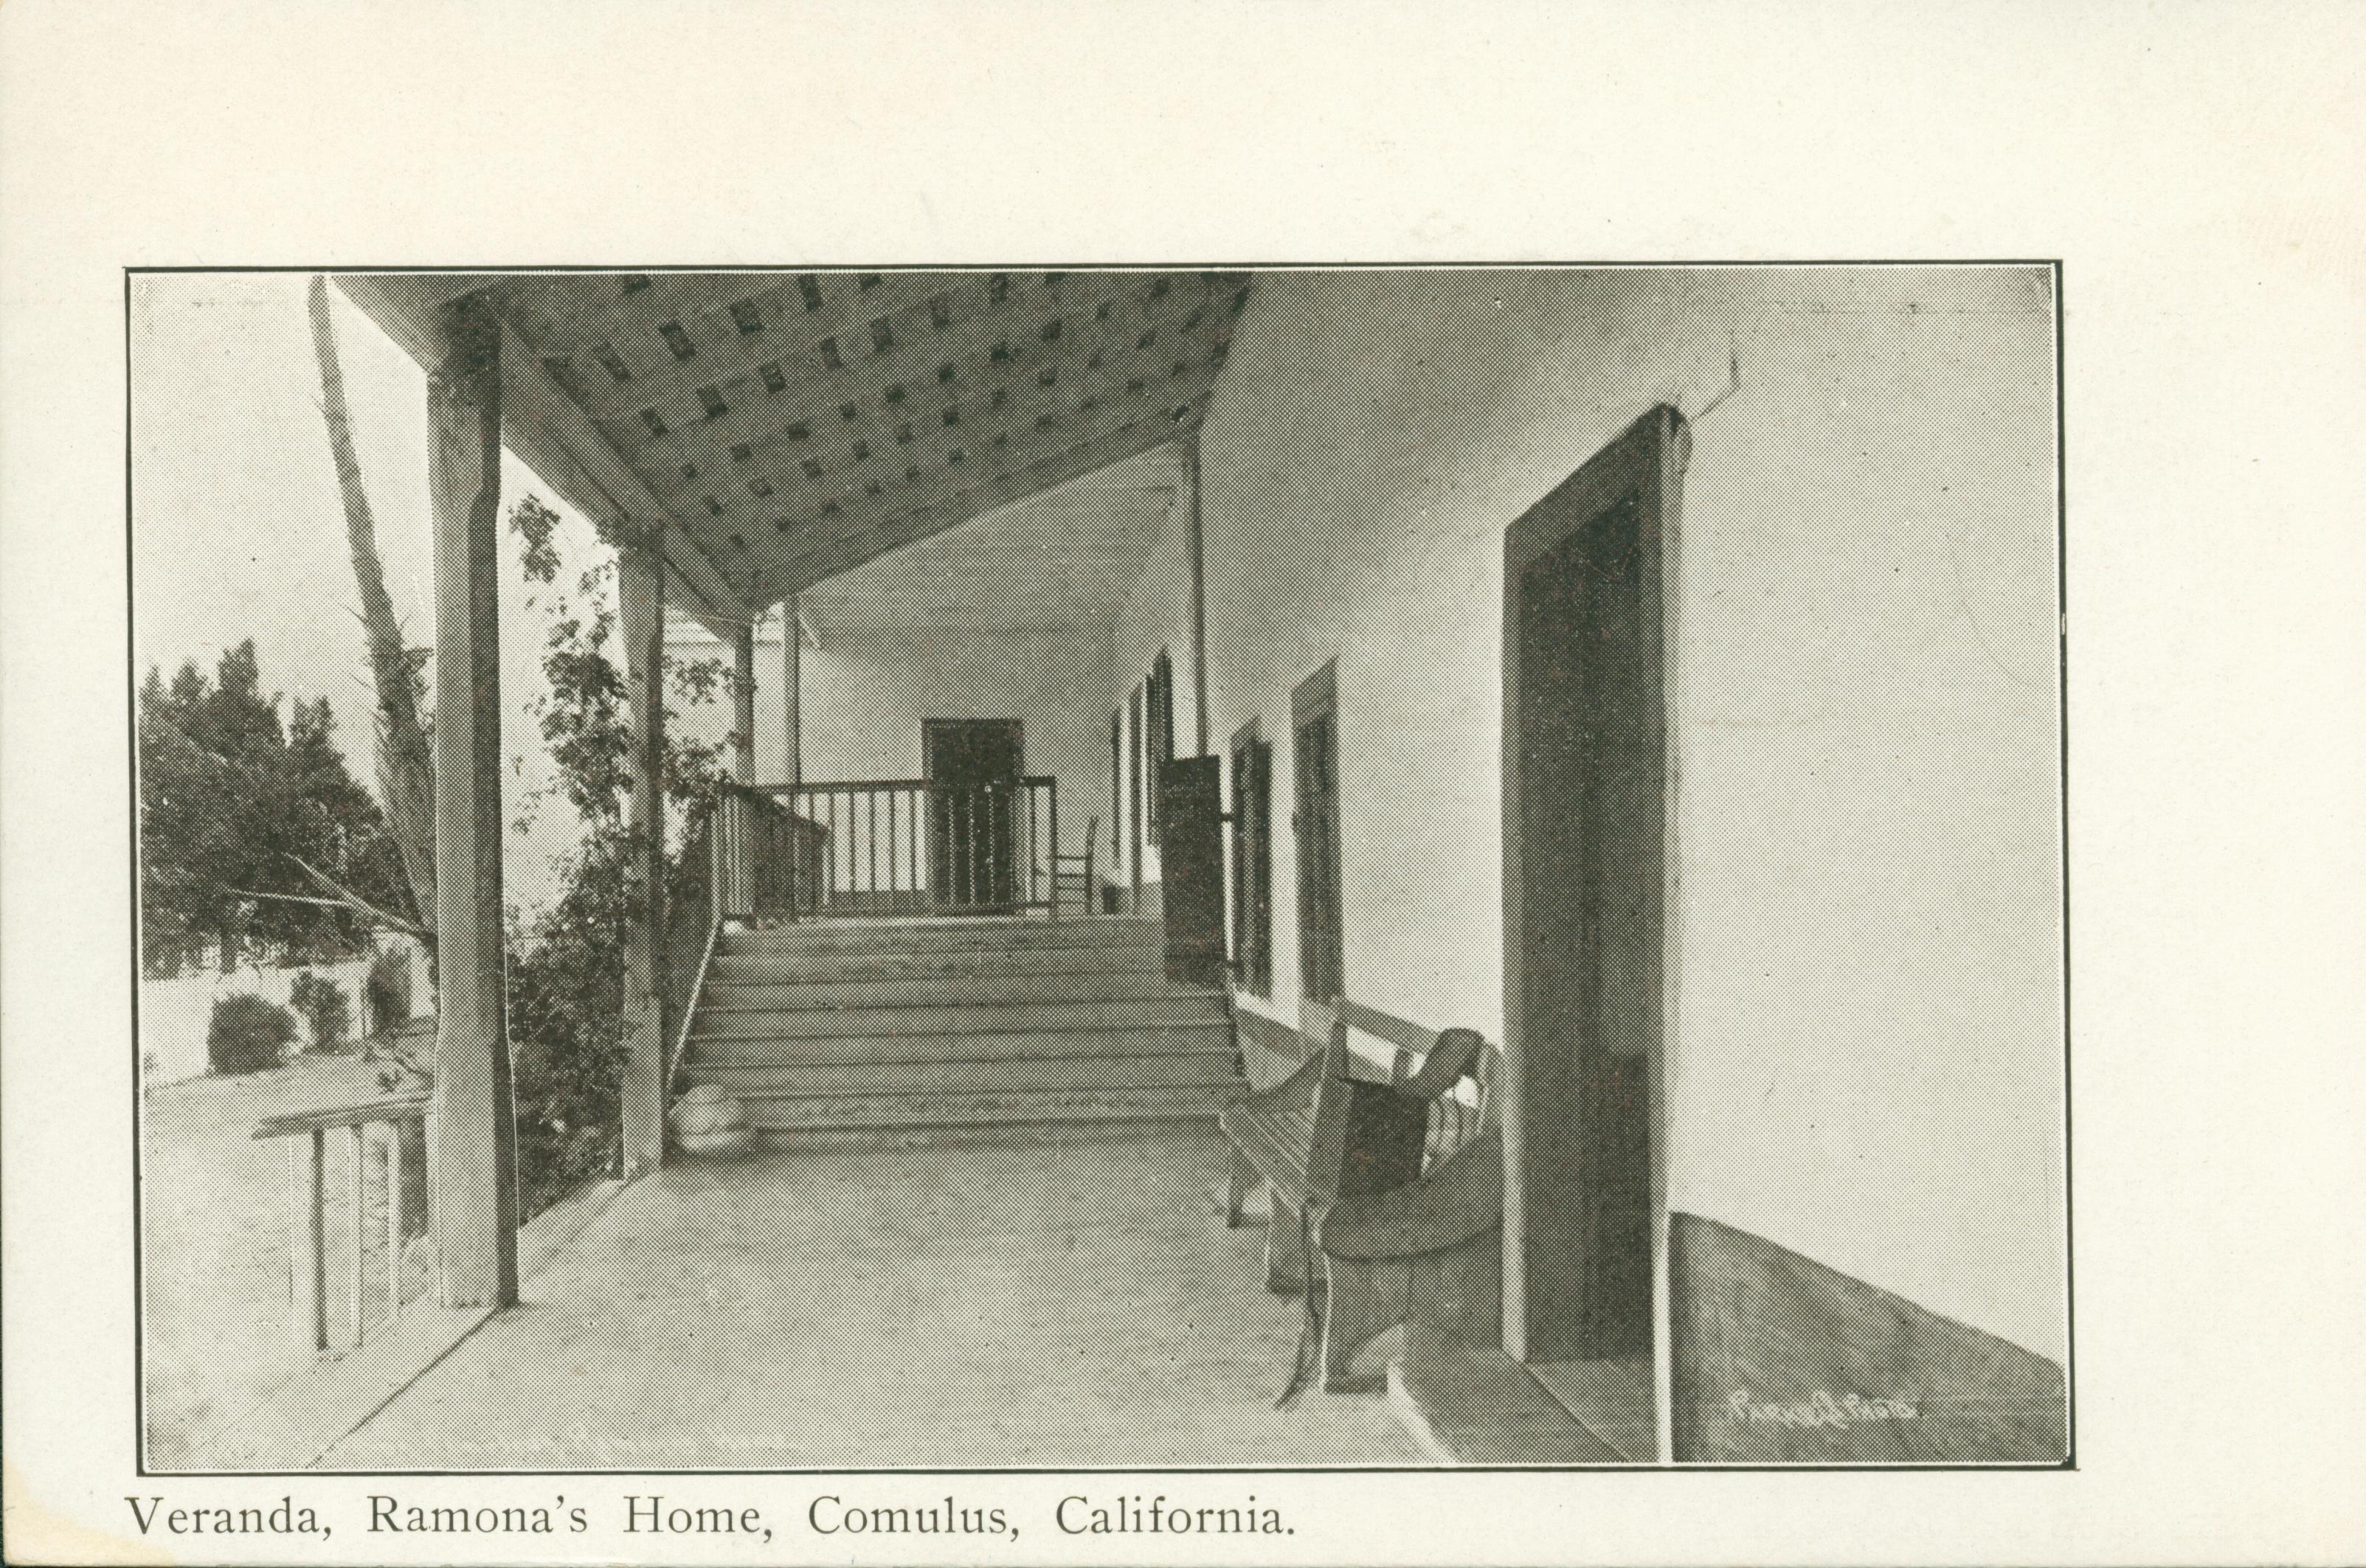 Shows the veranda of the Camulos Rancho